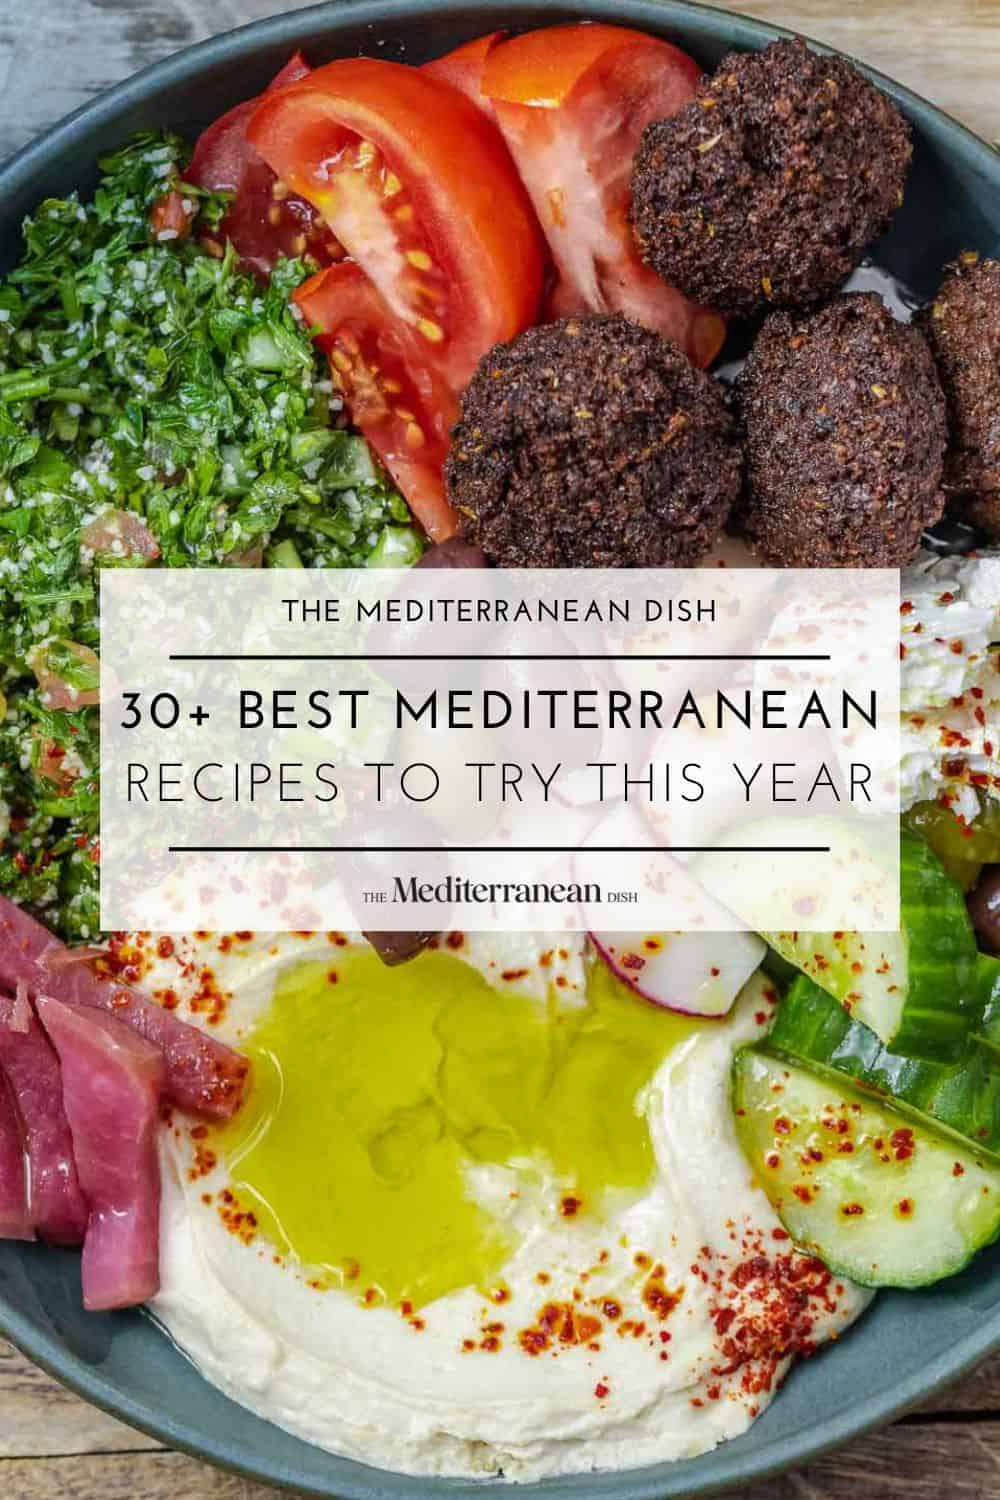 https://www.themediterraneandish.com/wp-content/uploads/2022/12/Top-Mediterranean-Recipes-2023-Graphics-6.jpg